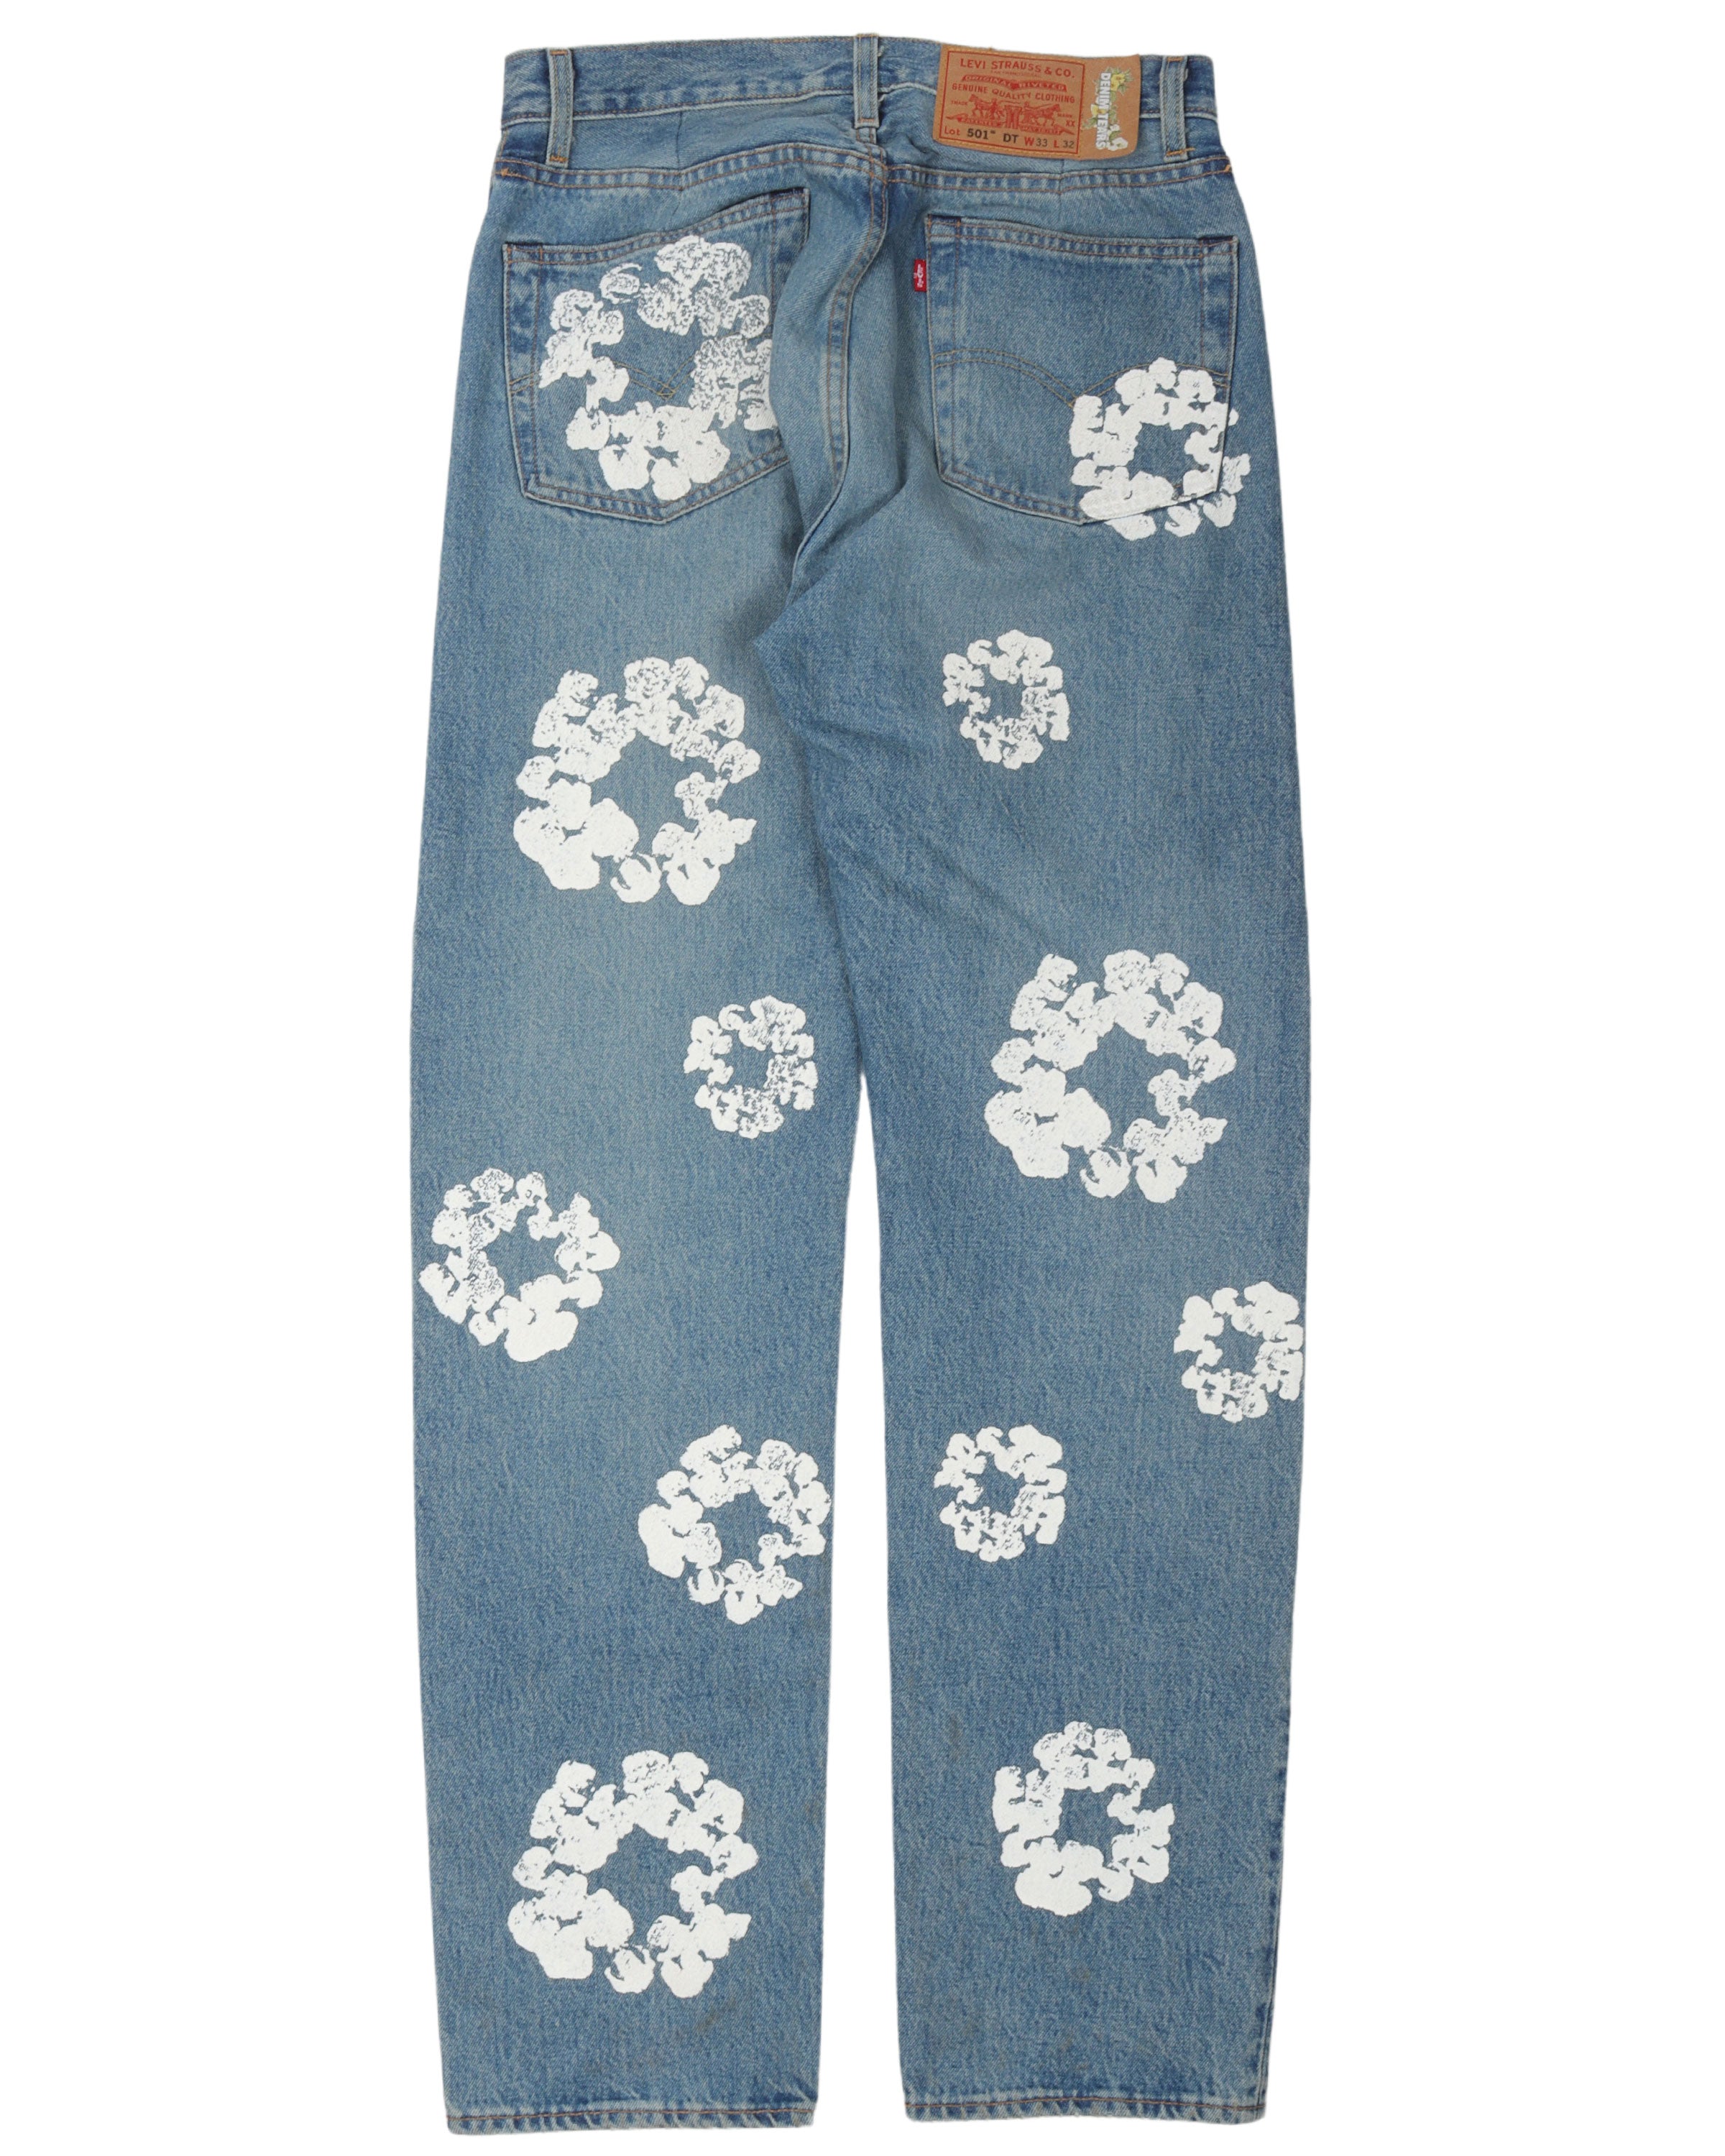 Blue Denim Tears Baggy Jeans Design On Jeans Cotton Wreath Jean